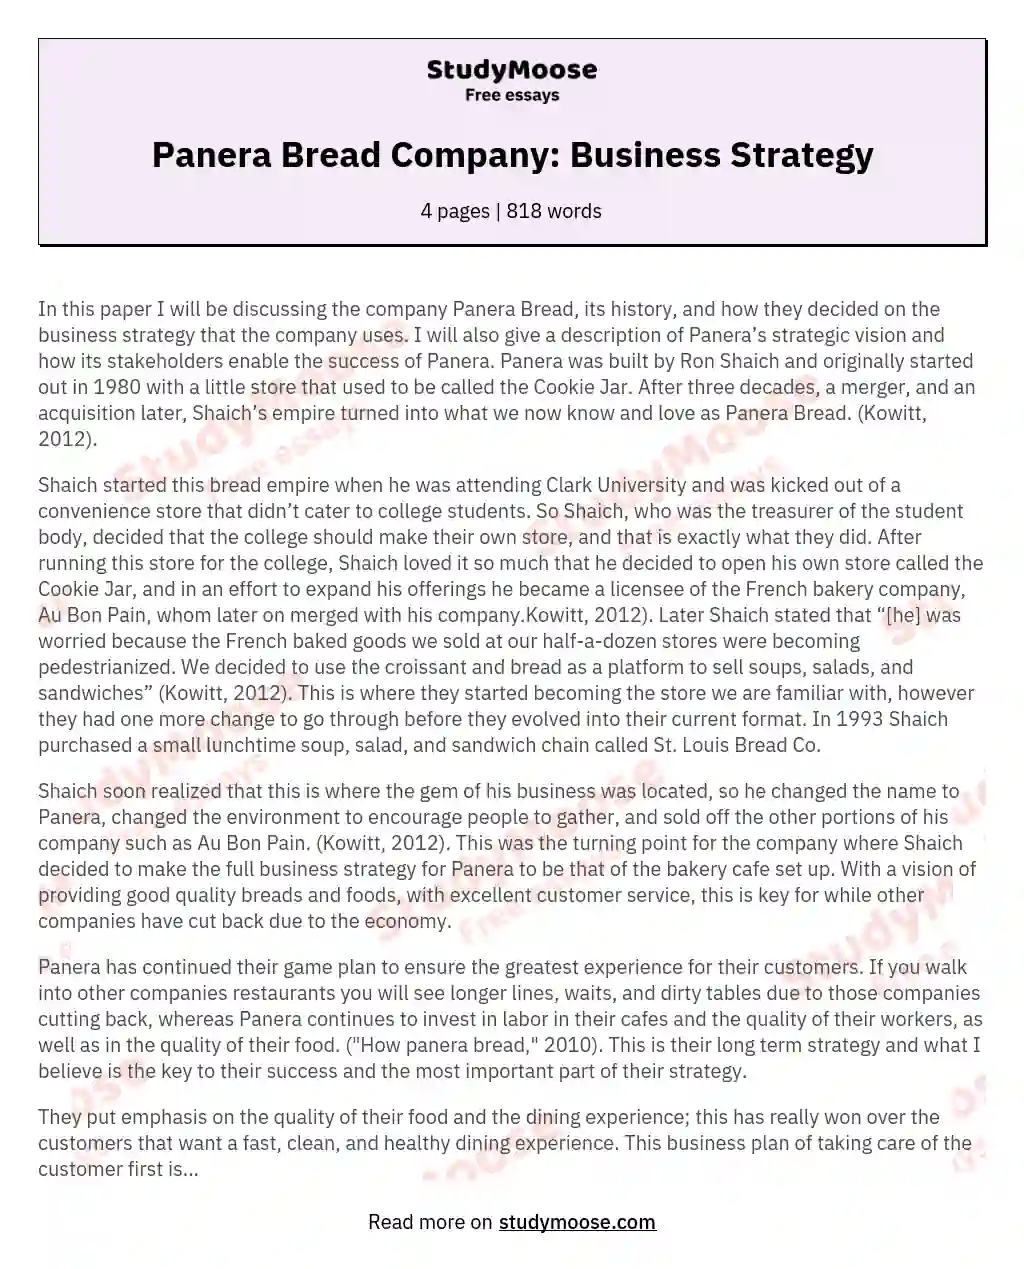 Panera Bread Company: Business Strategy